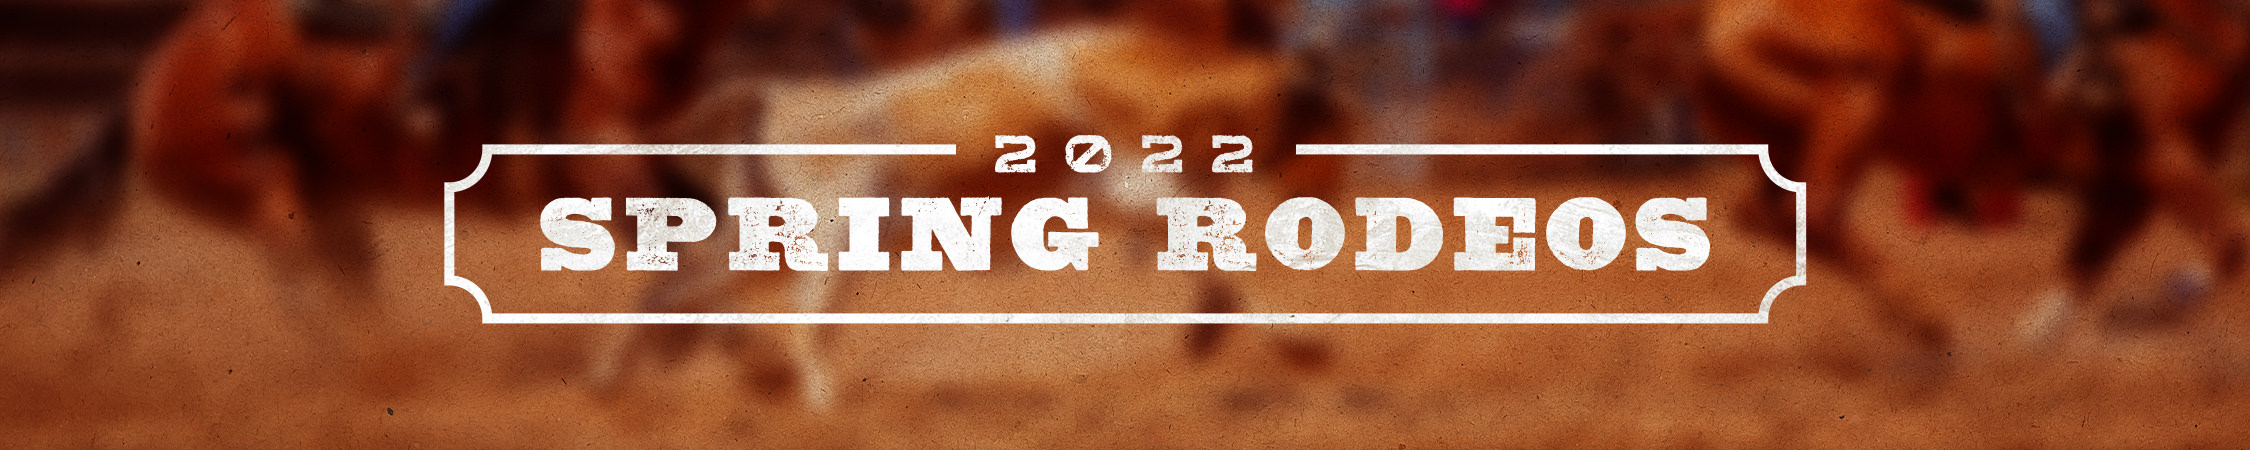 Spring Rodeos 2022